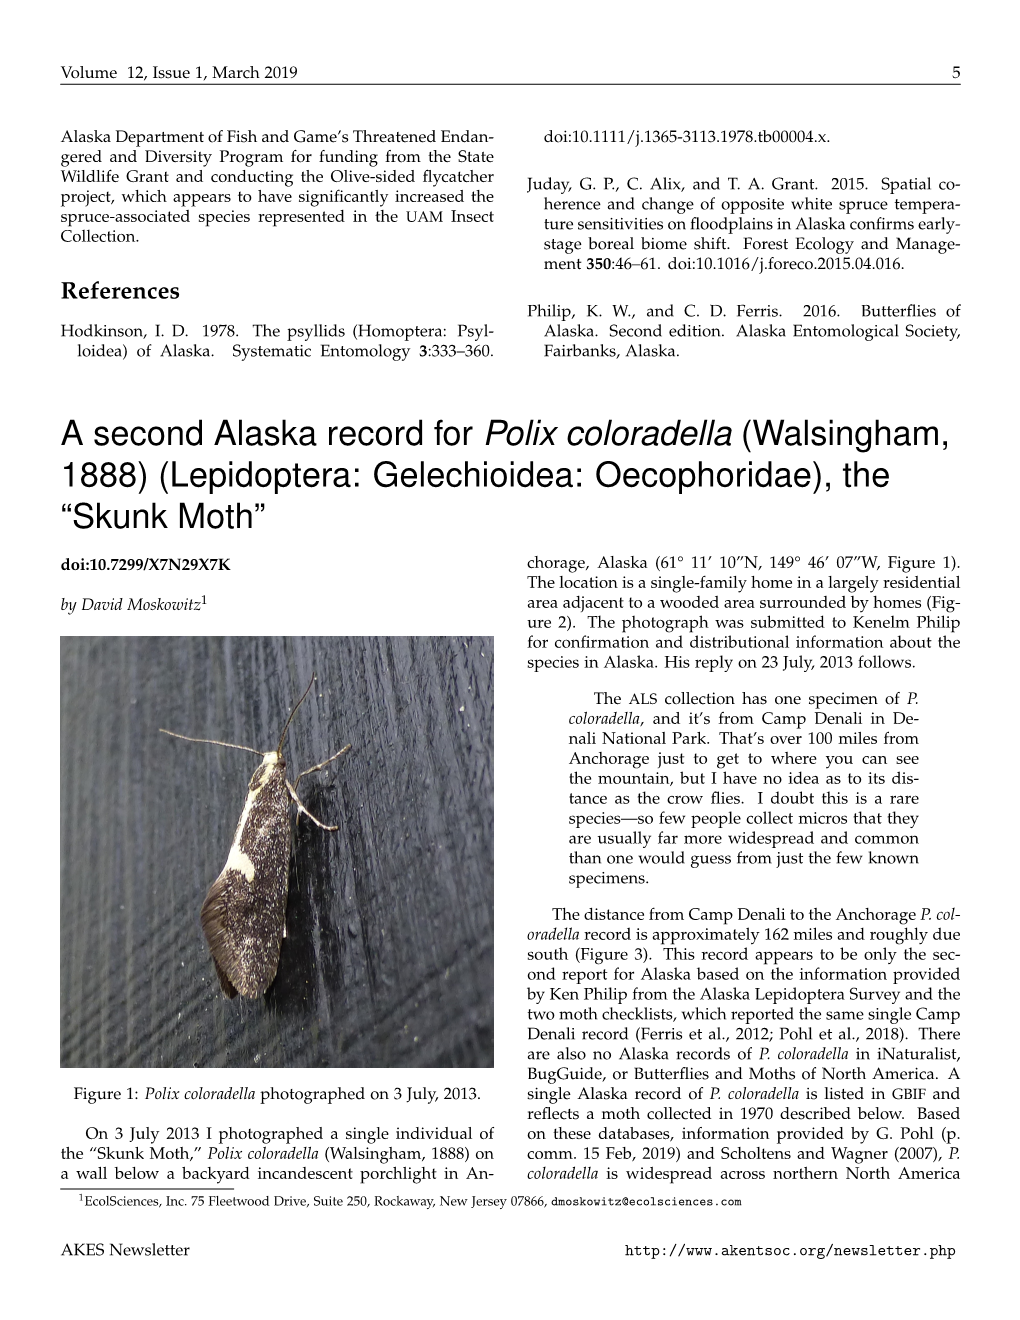 Lepidoptera: Gelechioidea: Oecophoridae), the “Skunk Moth” Doi:10.7299/X7N29X7K Chorage, Alaska (61° 11’ 10”N, 149° 46’ 07”W, Figure 1